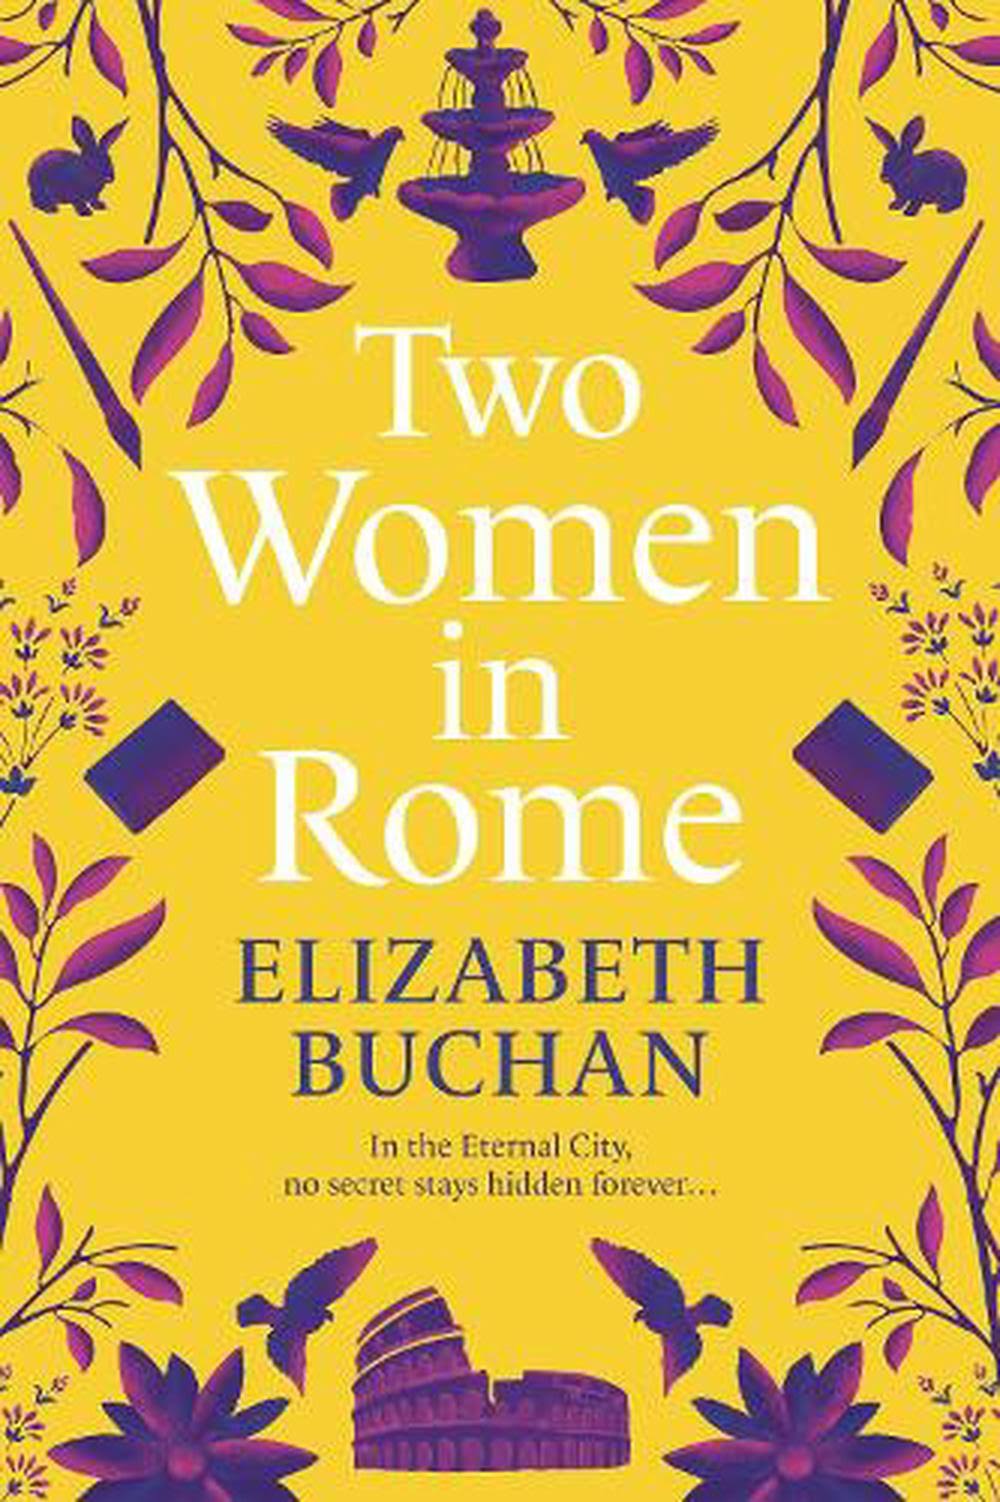 Two Women in Rome [Book]